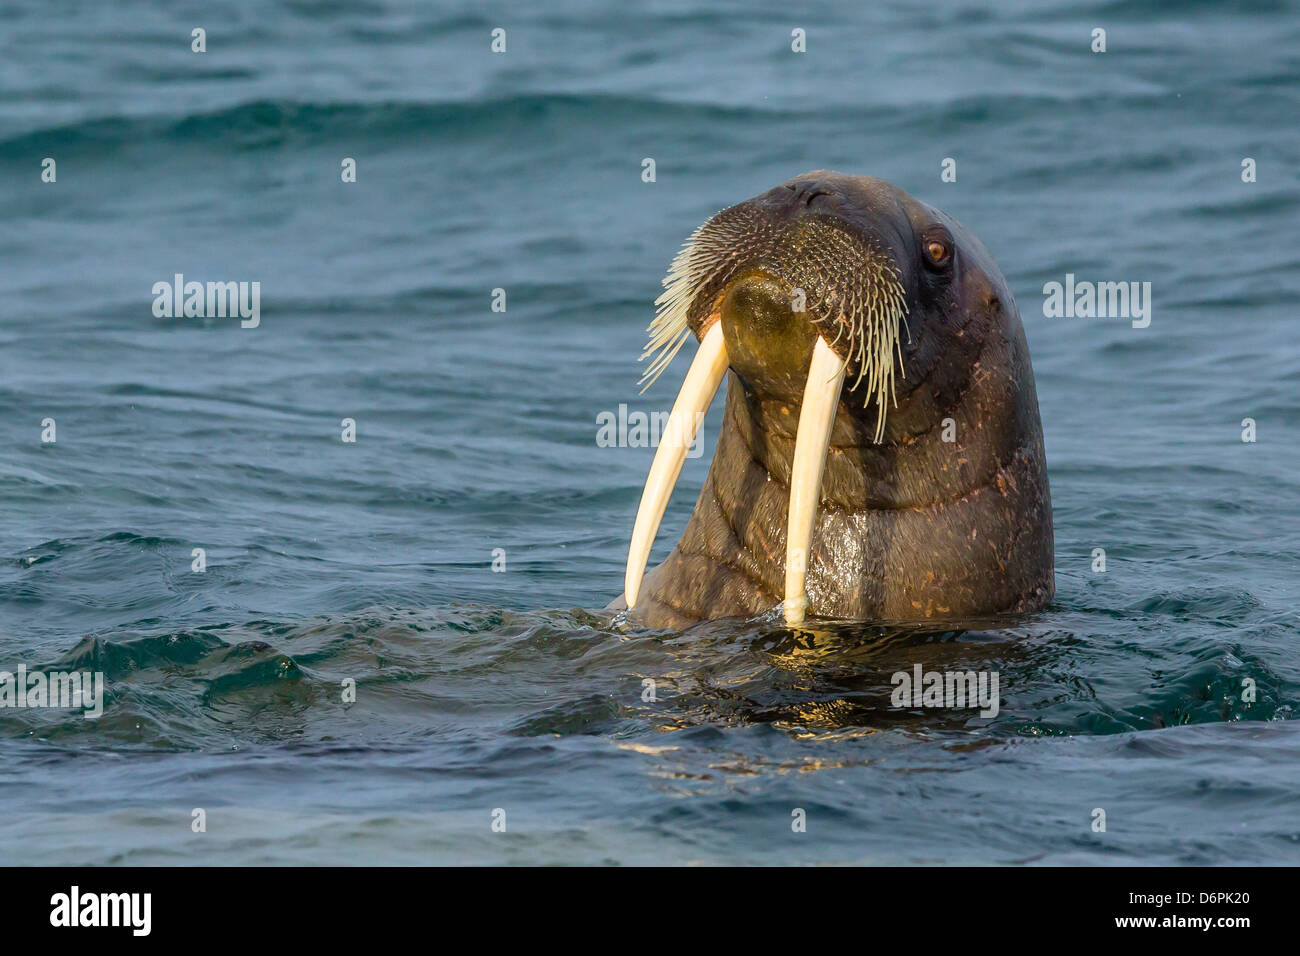 Adult walrus (Odobenus rosmarus rosmarus), Torrelneset, Nordauslandet Island, Svalbard Archipelago, Norway, Scandinavia, Europe Stock Photo